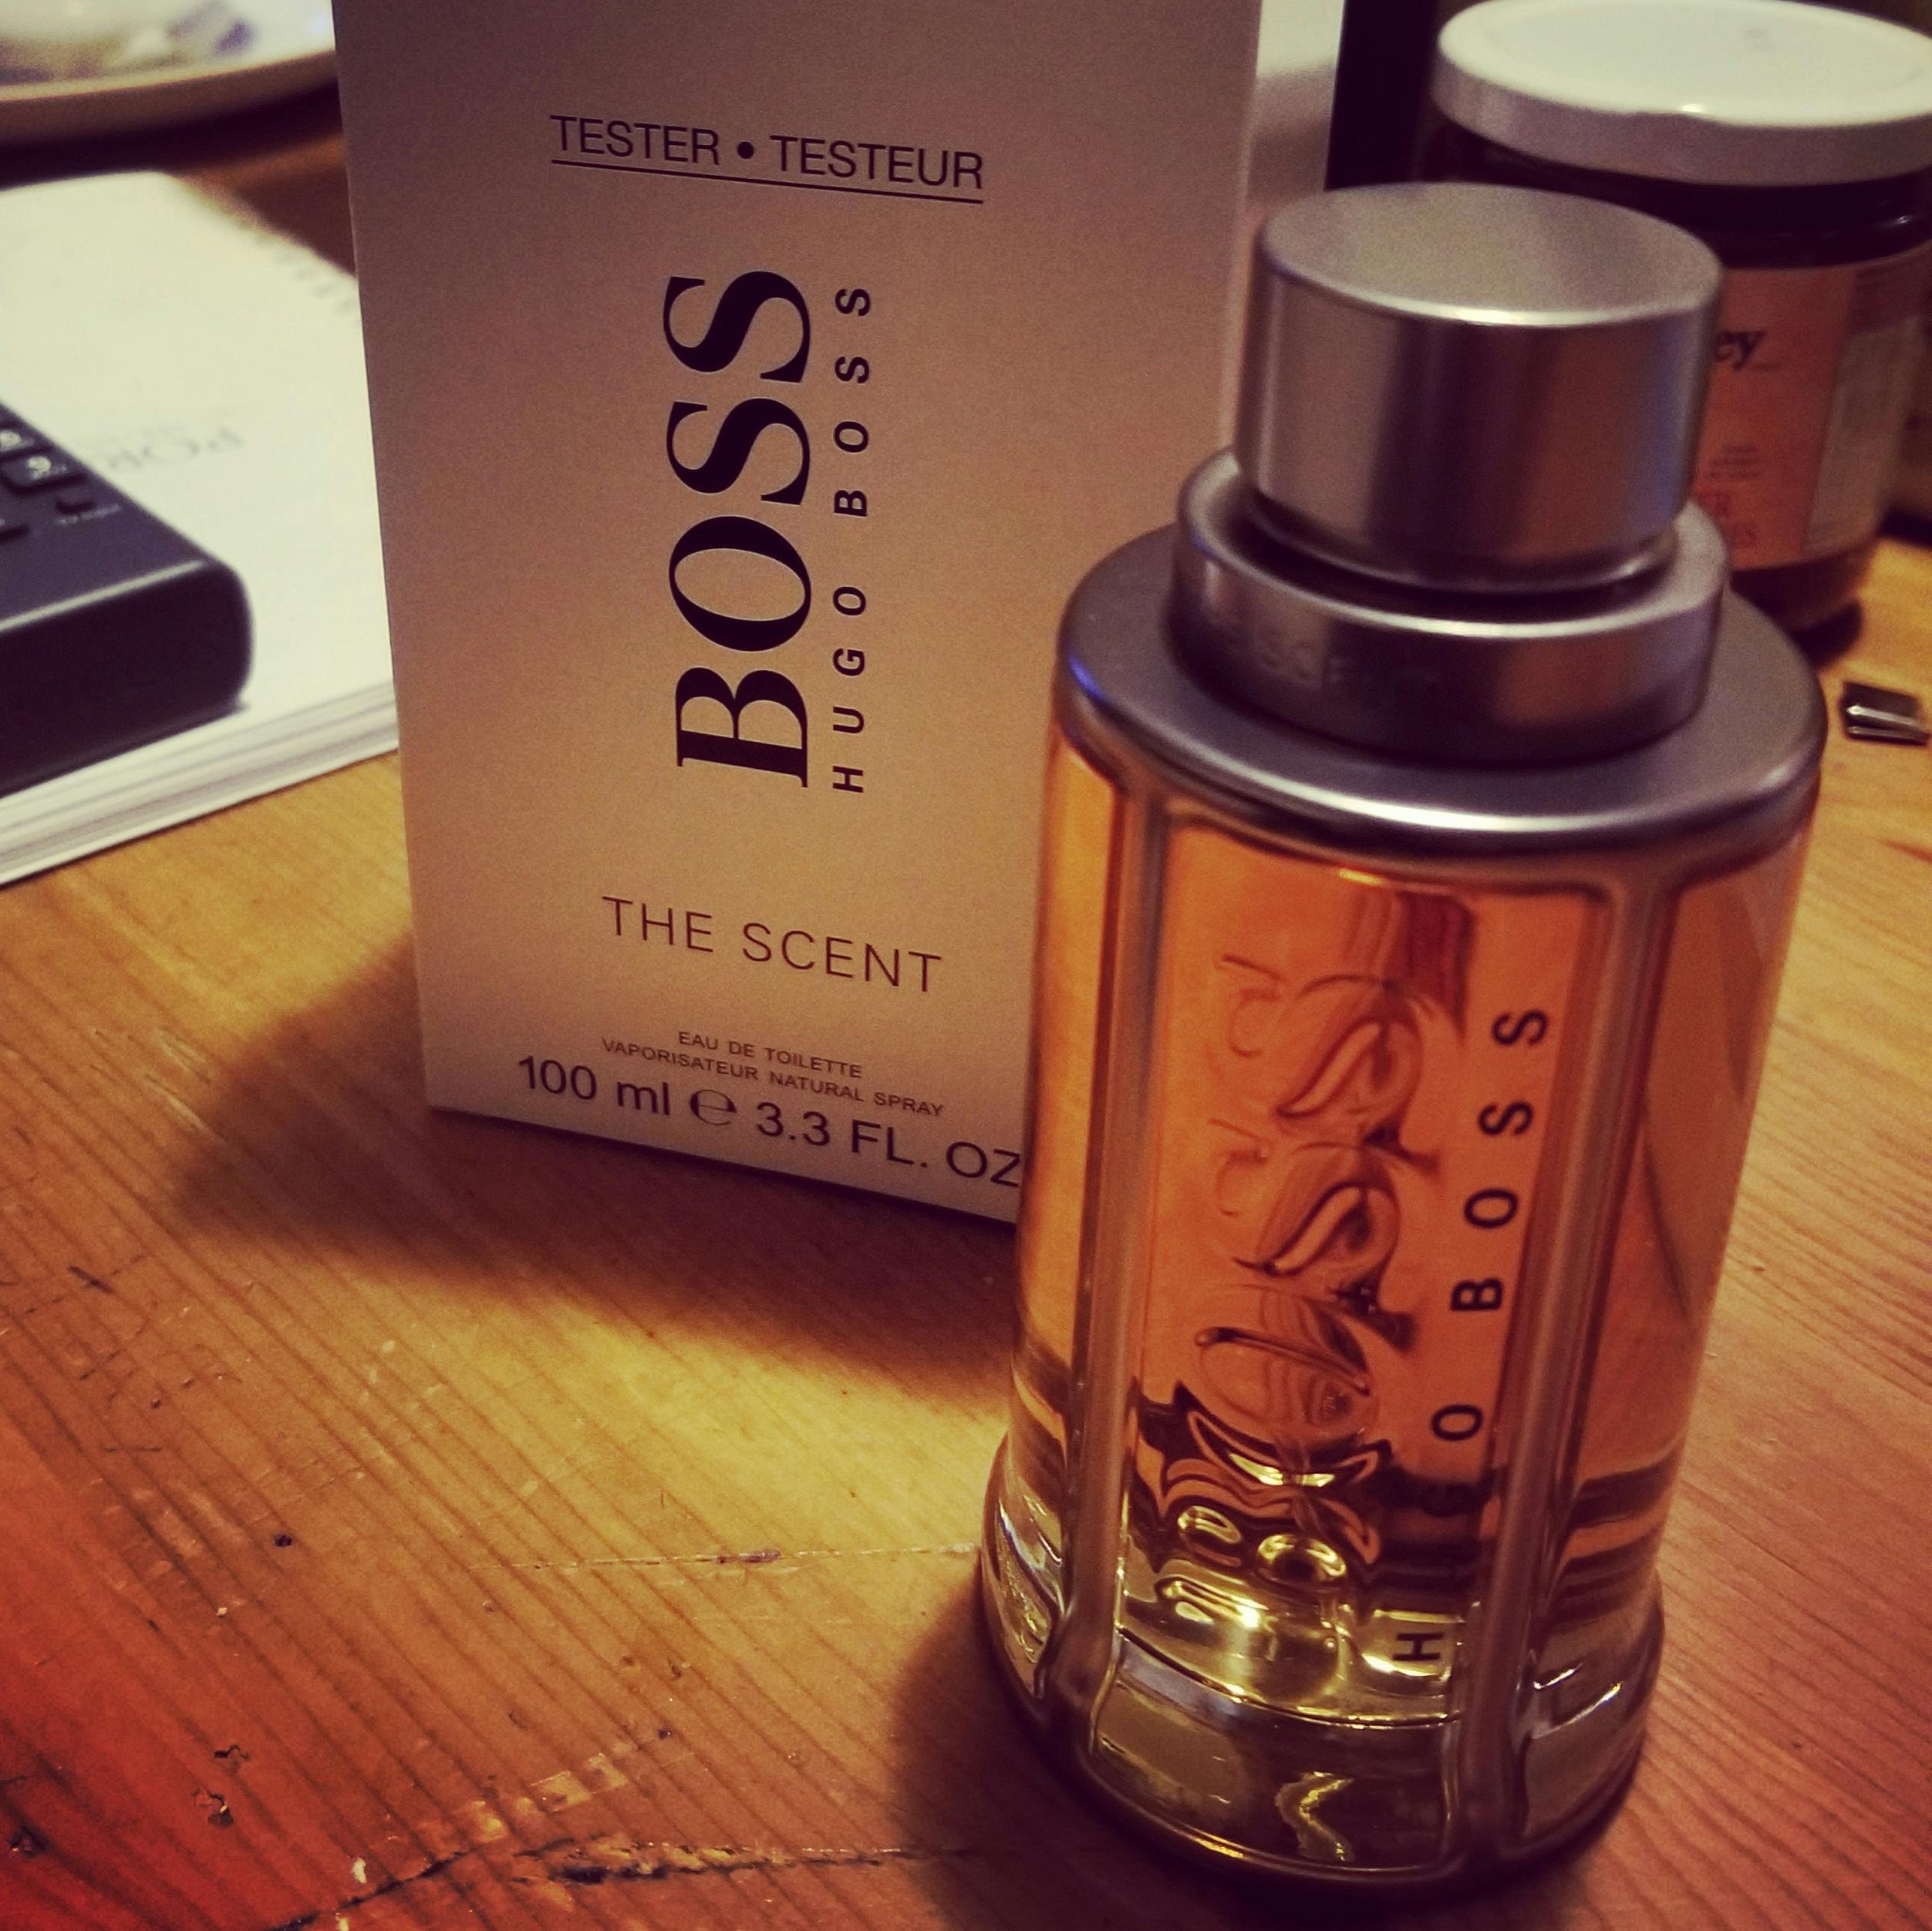 hugo boss the scent reviews